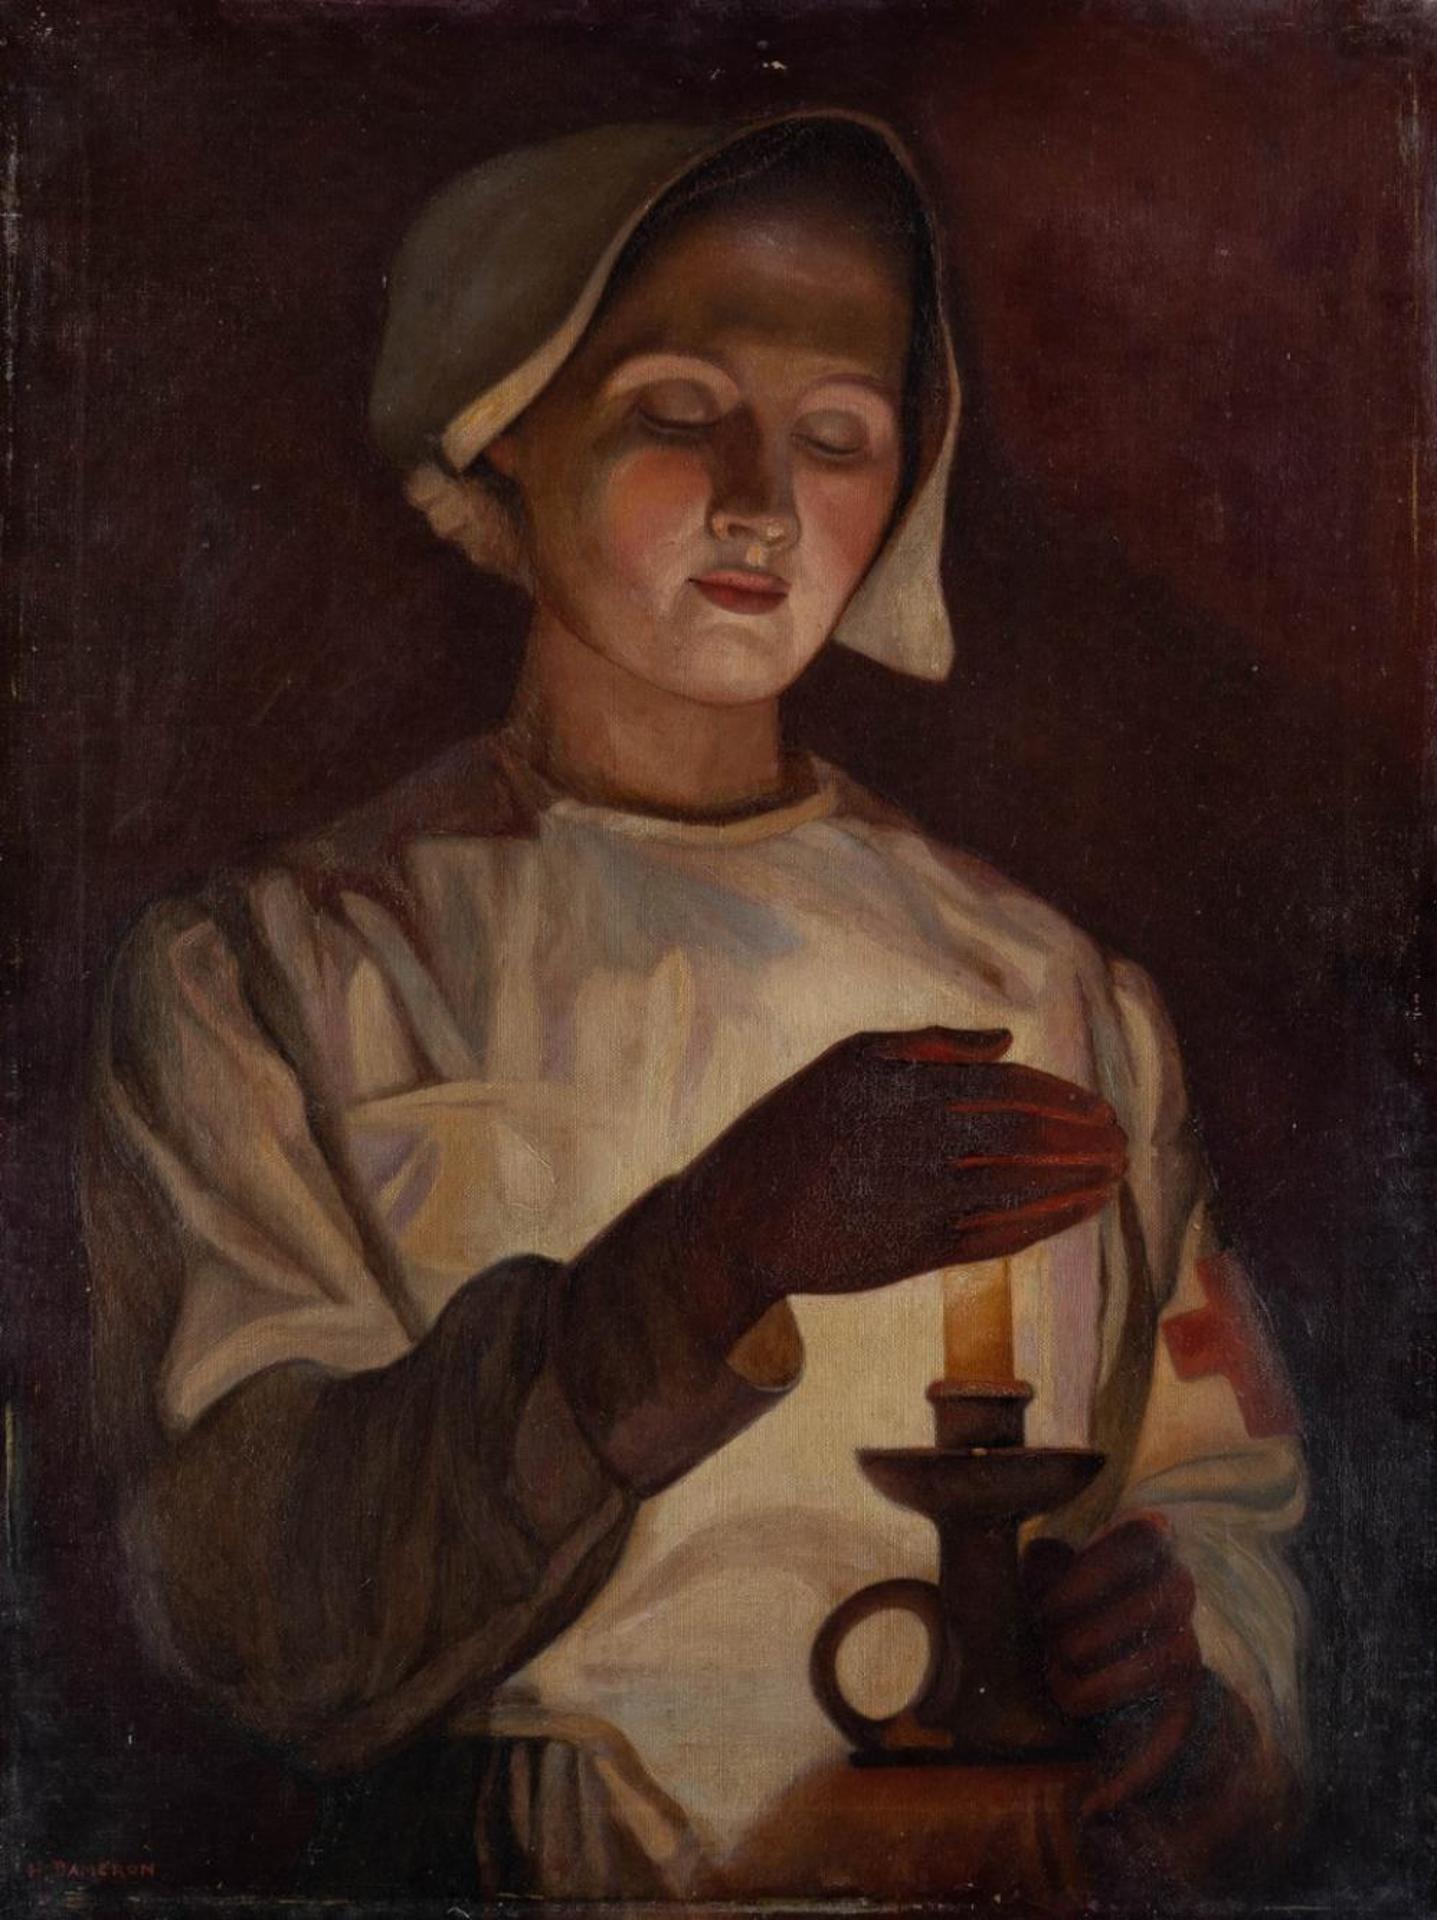 H. Dameron - oil on canvas